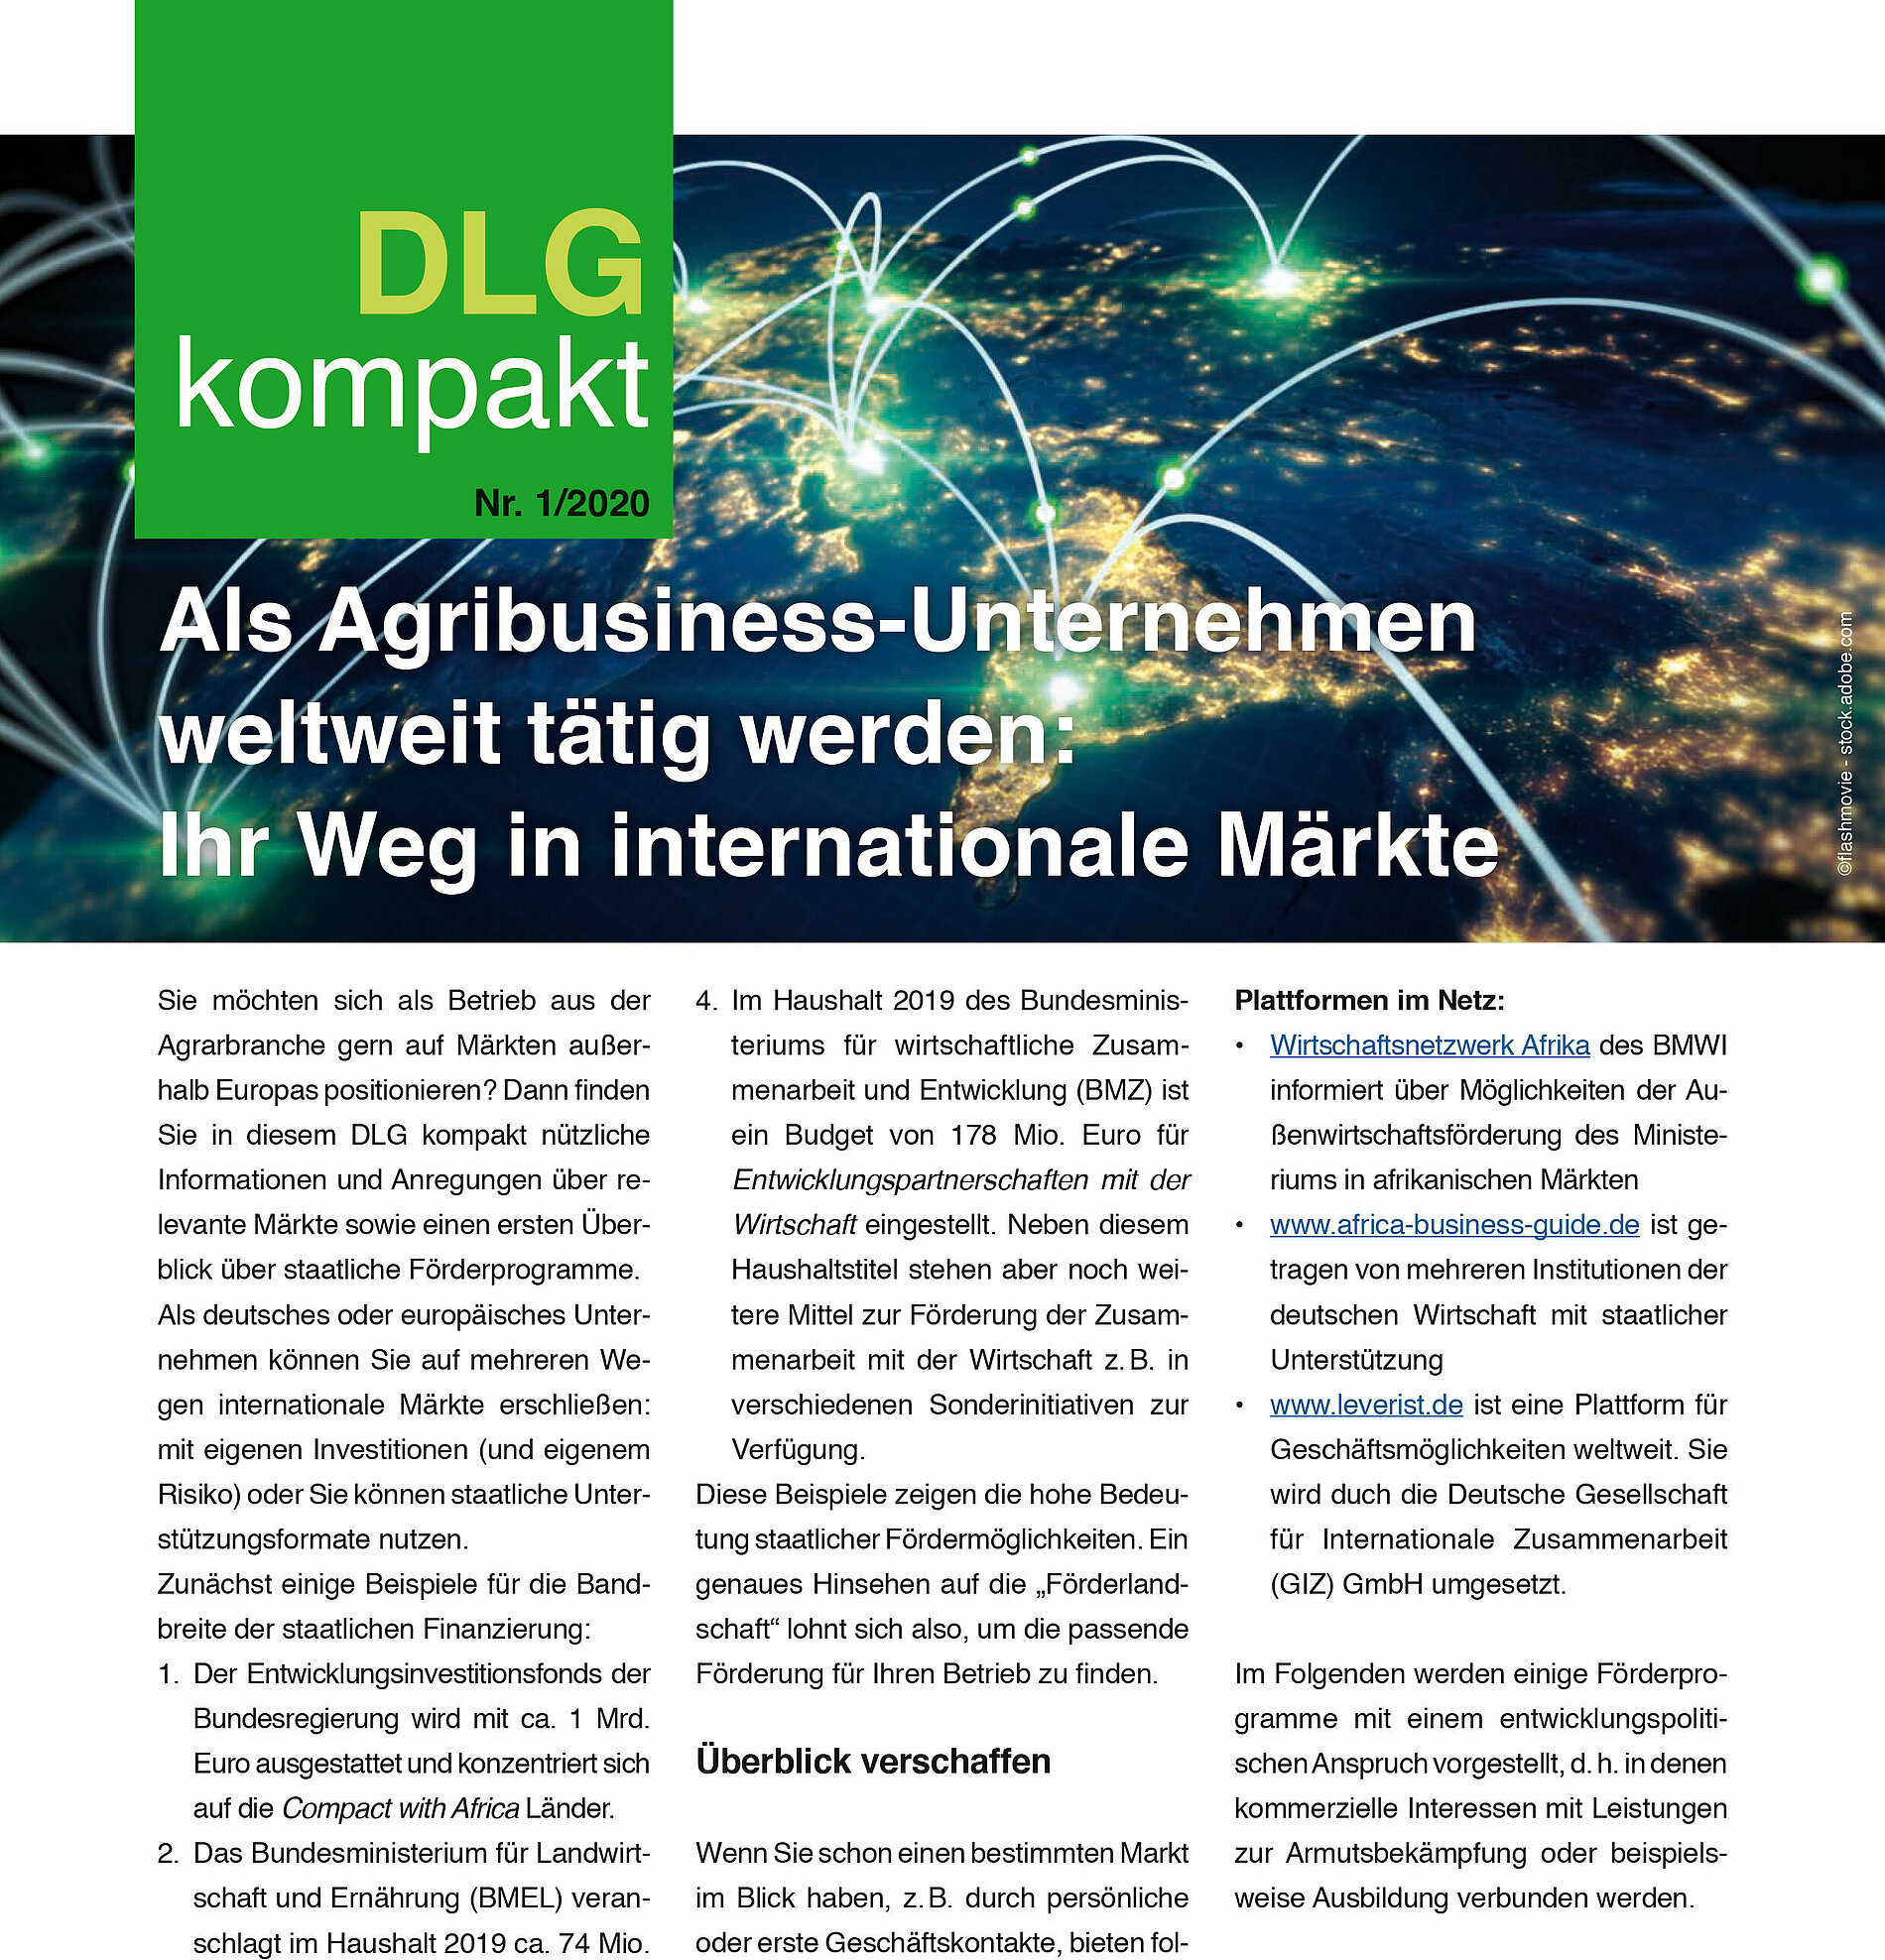 DLG-Kompakt Agribusiness-Unternehmen